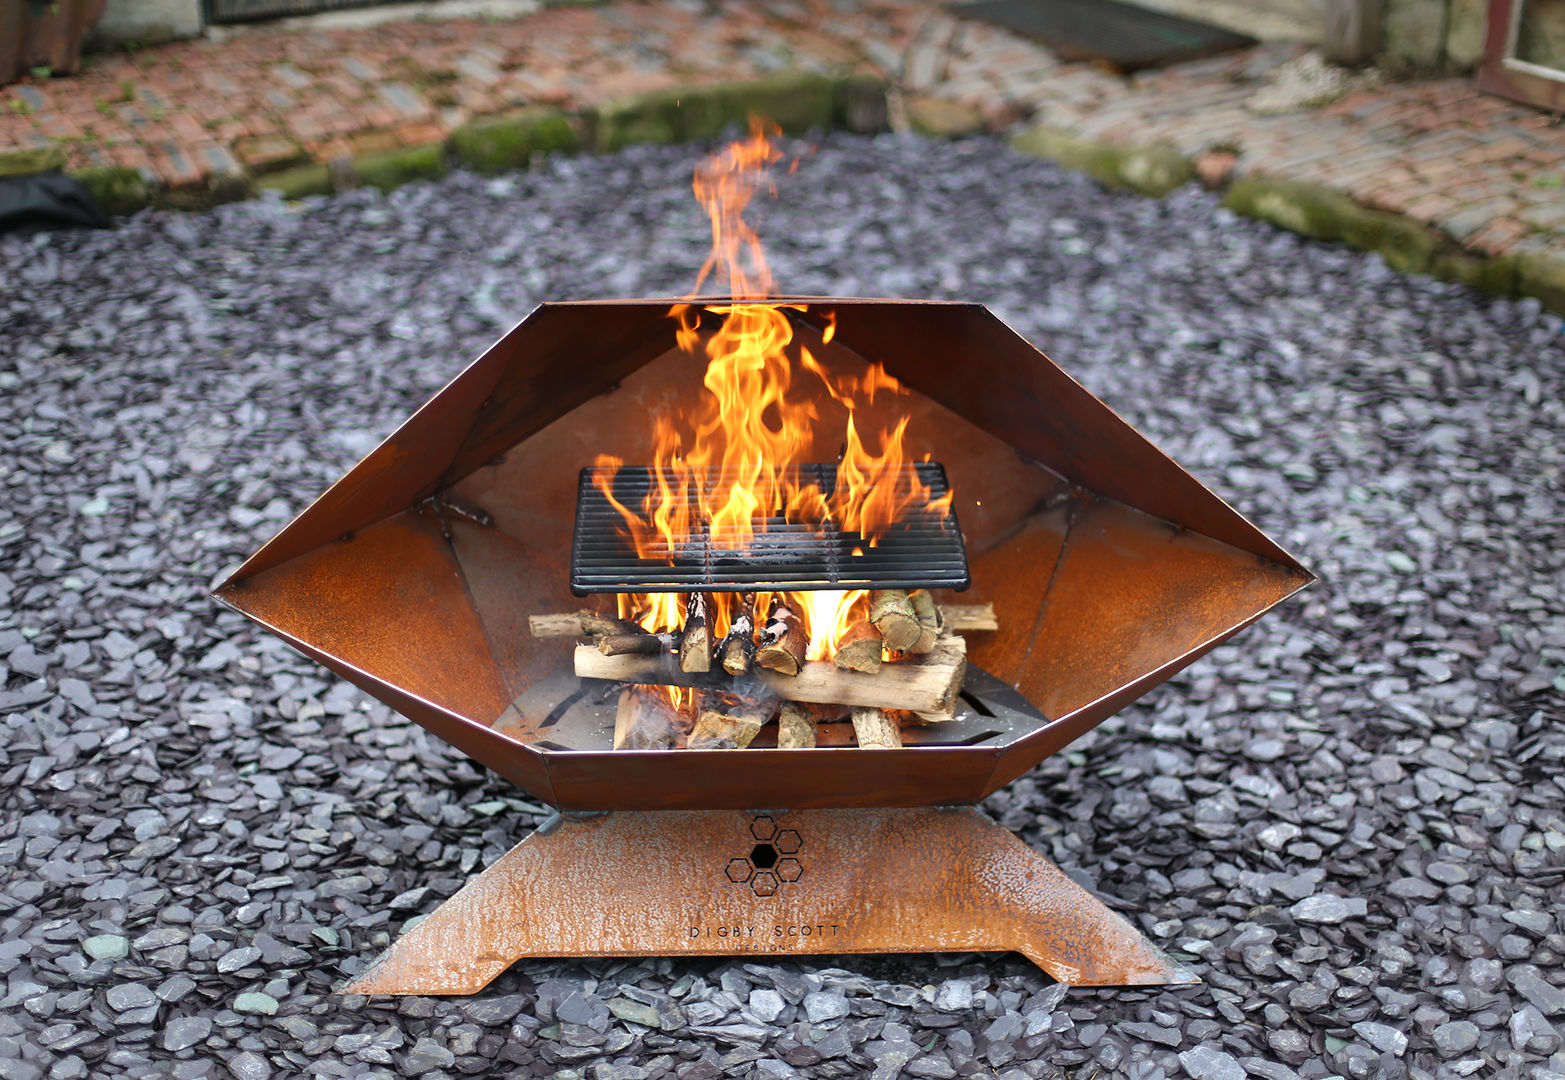 Sphenomegacorona Barbecue and Fire Pit Digby Scott Designs Nowoczesny ogród Żelazo/Stal Miejsca na ognisko i grille